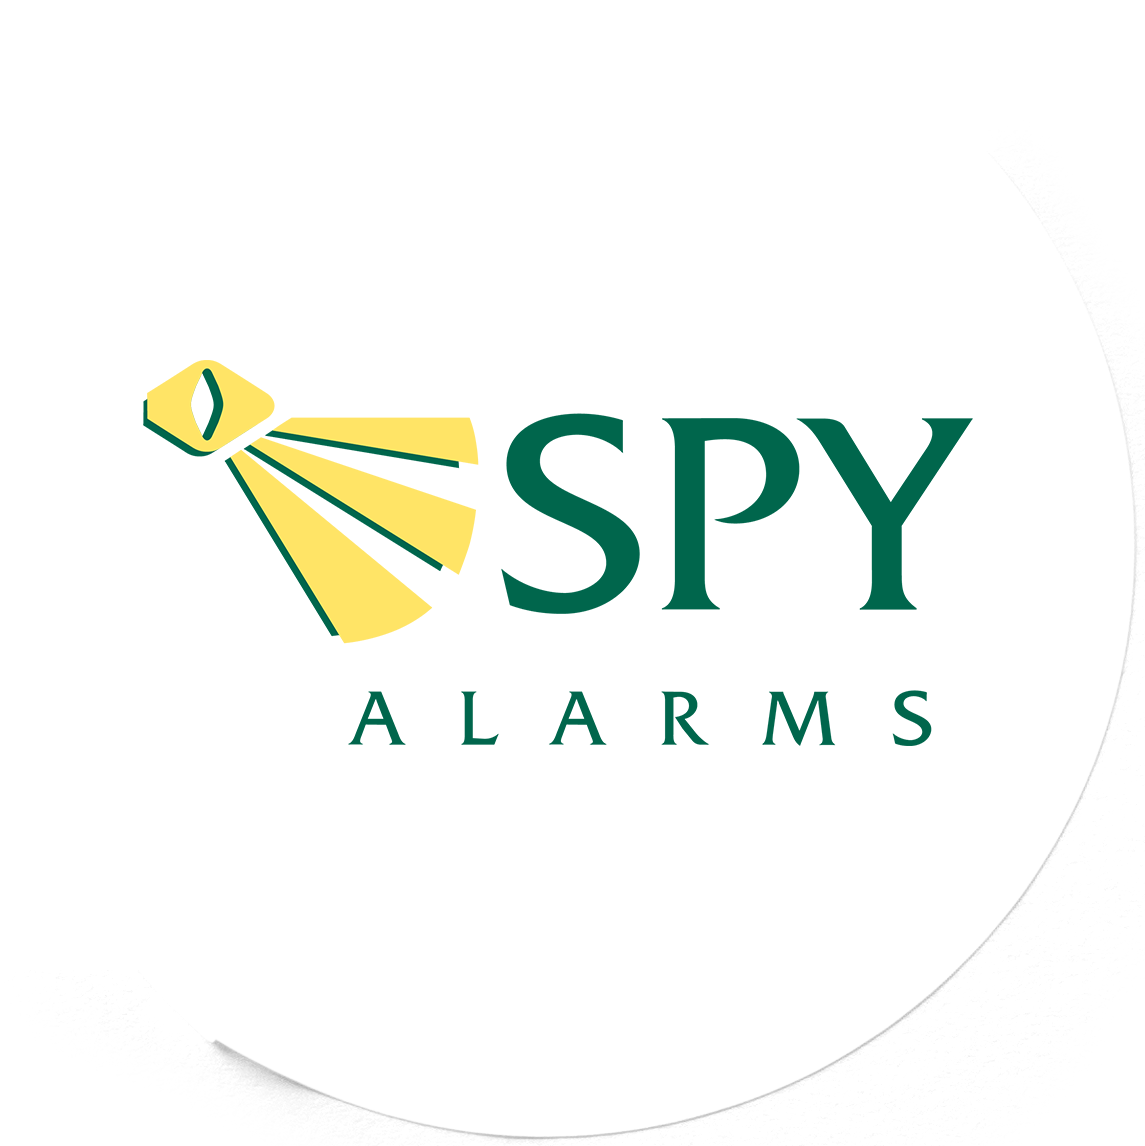 spy alarms logo sticker